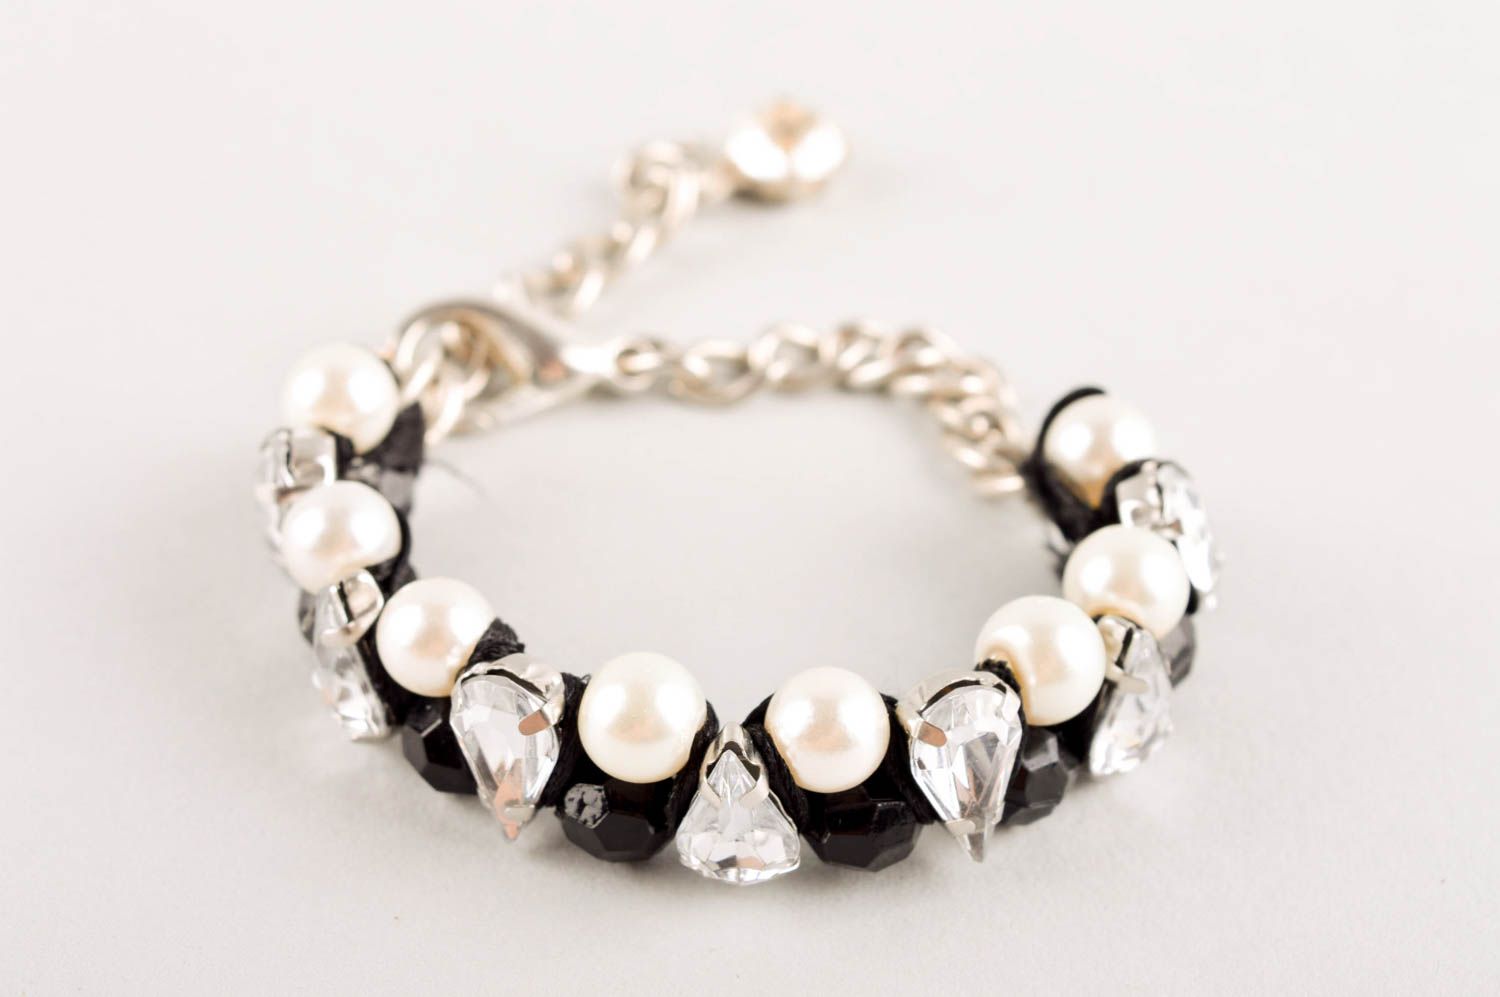 Handmade bracelet designer bracelet beaded jewelry unusual accessory gift ideas photo 2